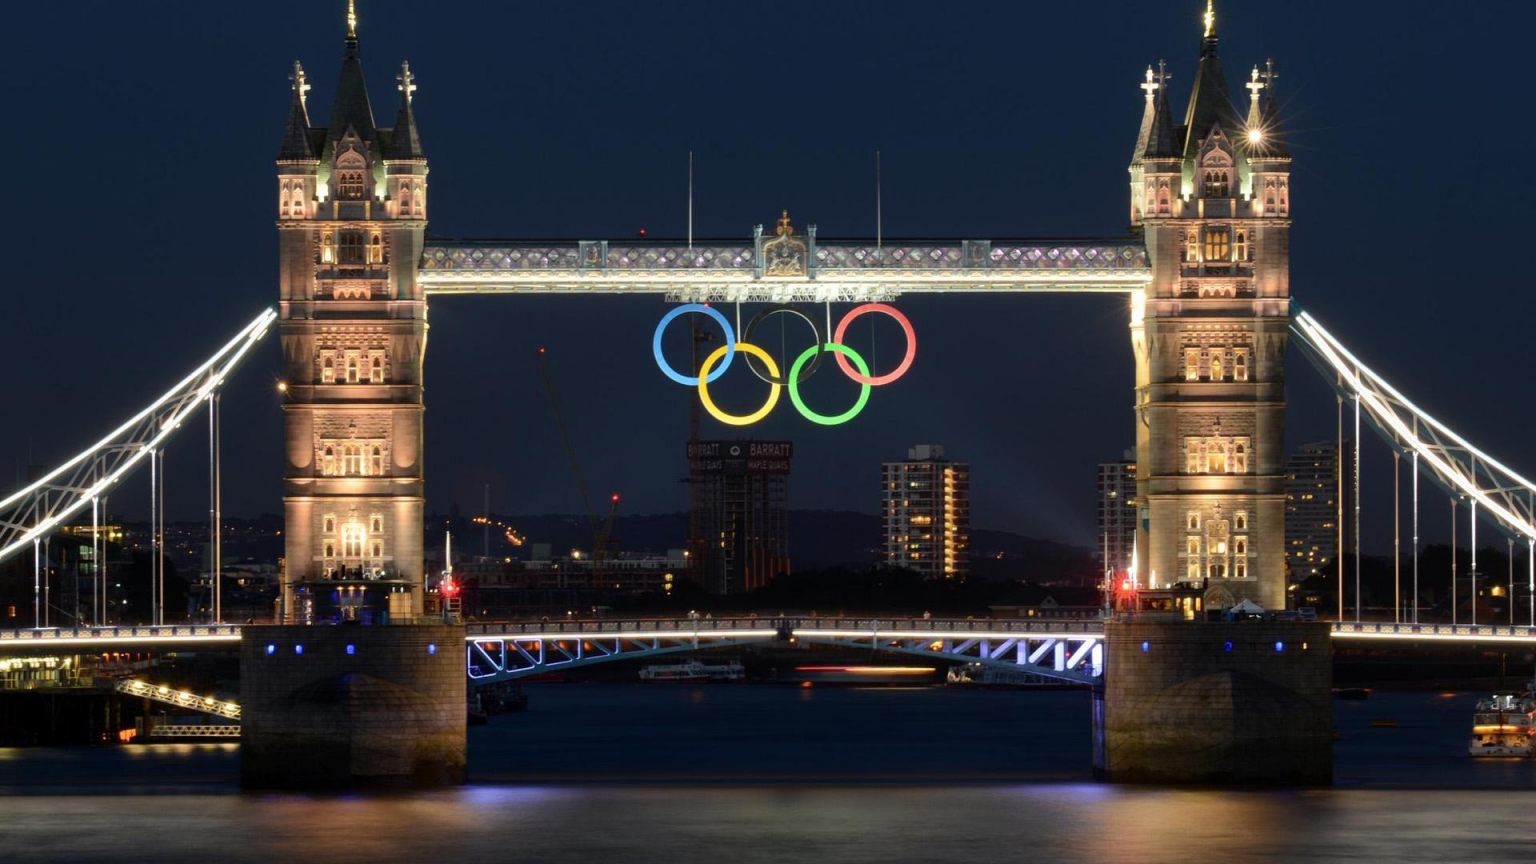 London Bridge 2012 Olympics for 1536 x 864 HDTV resolution